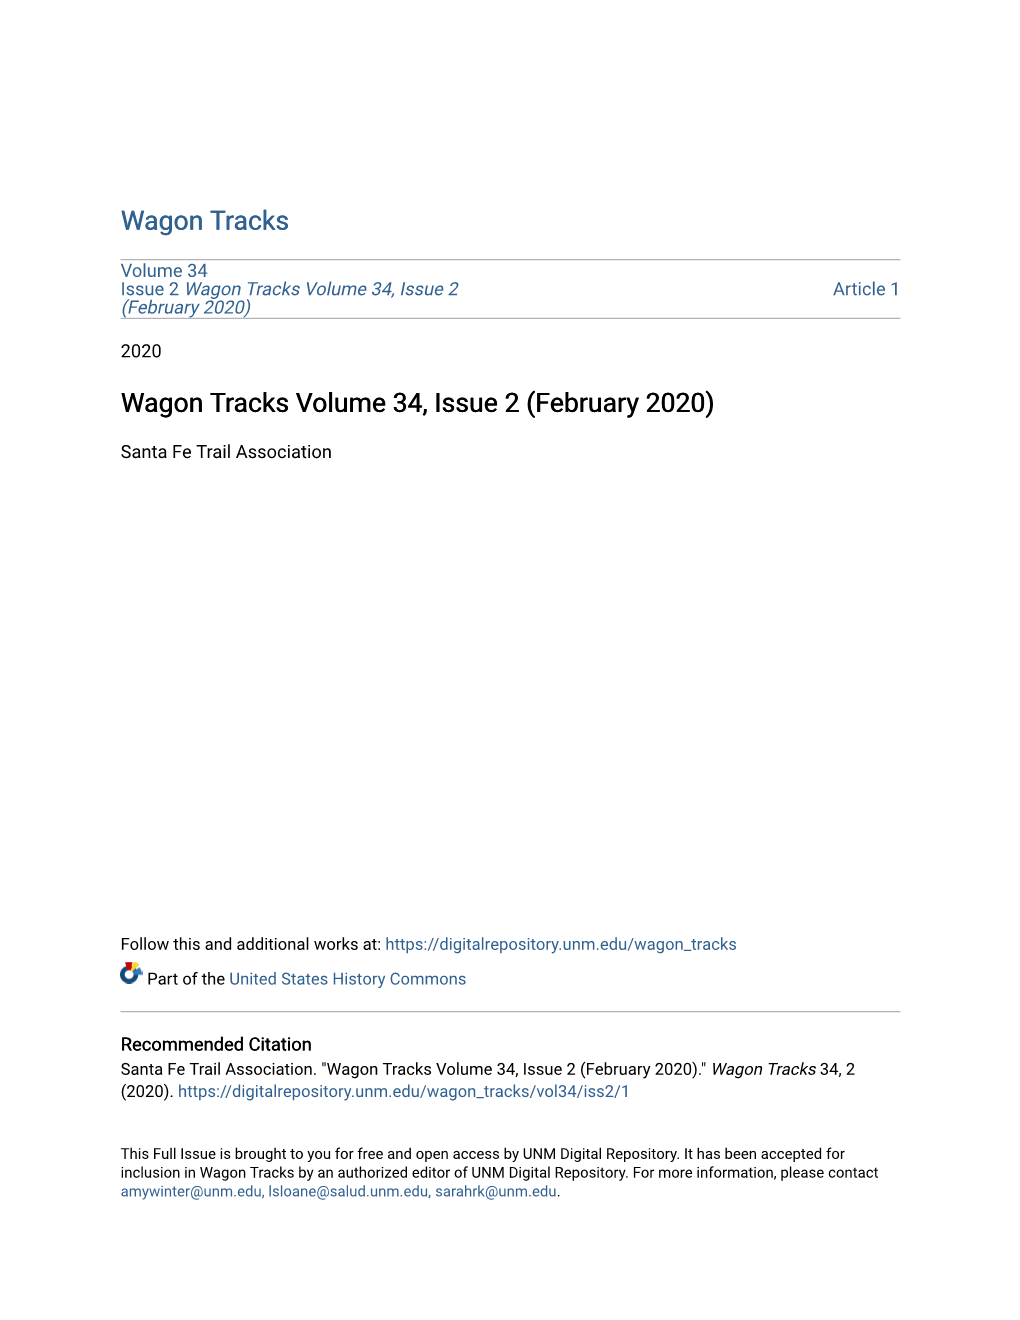 Wagon Tracks Volume 34, Issue 2 Article 1 (February 2020)